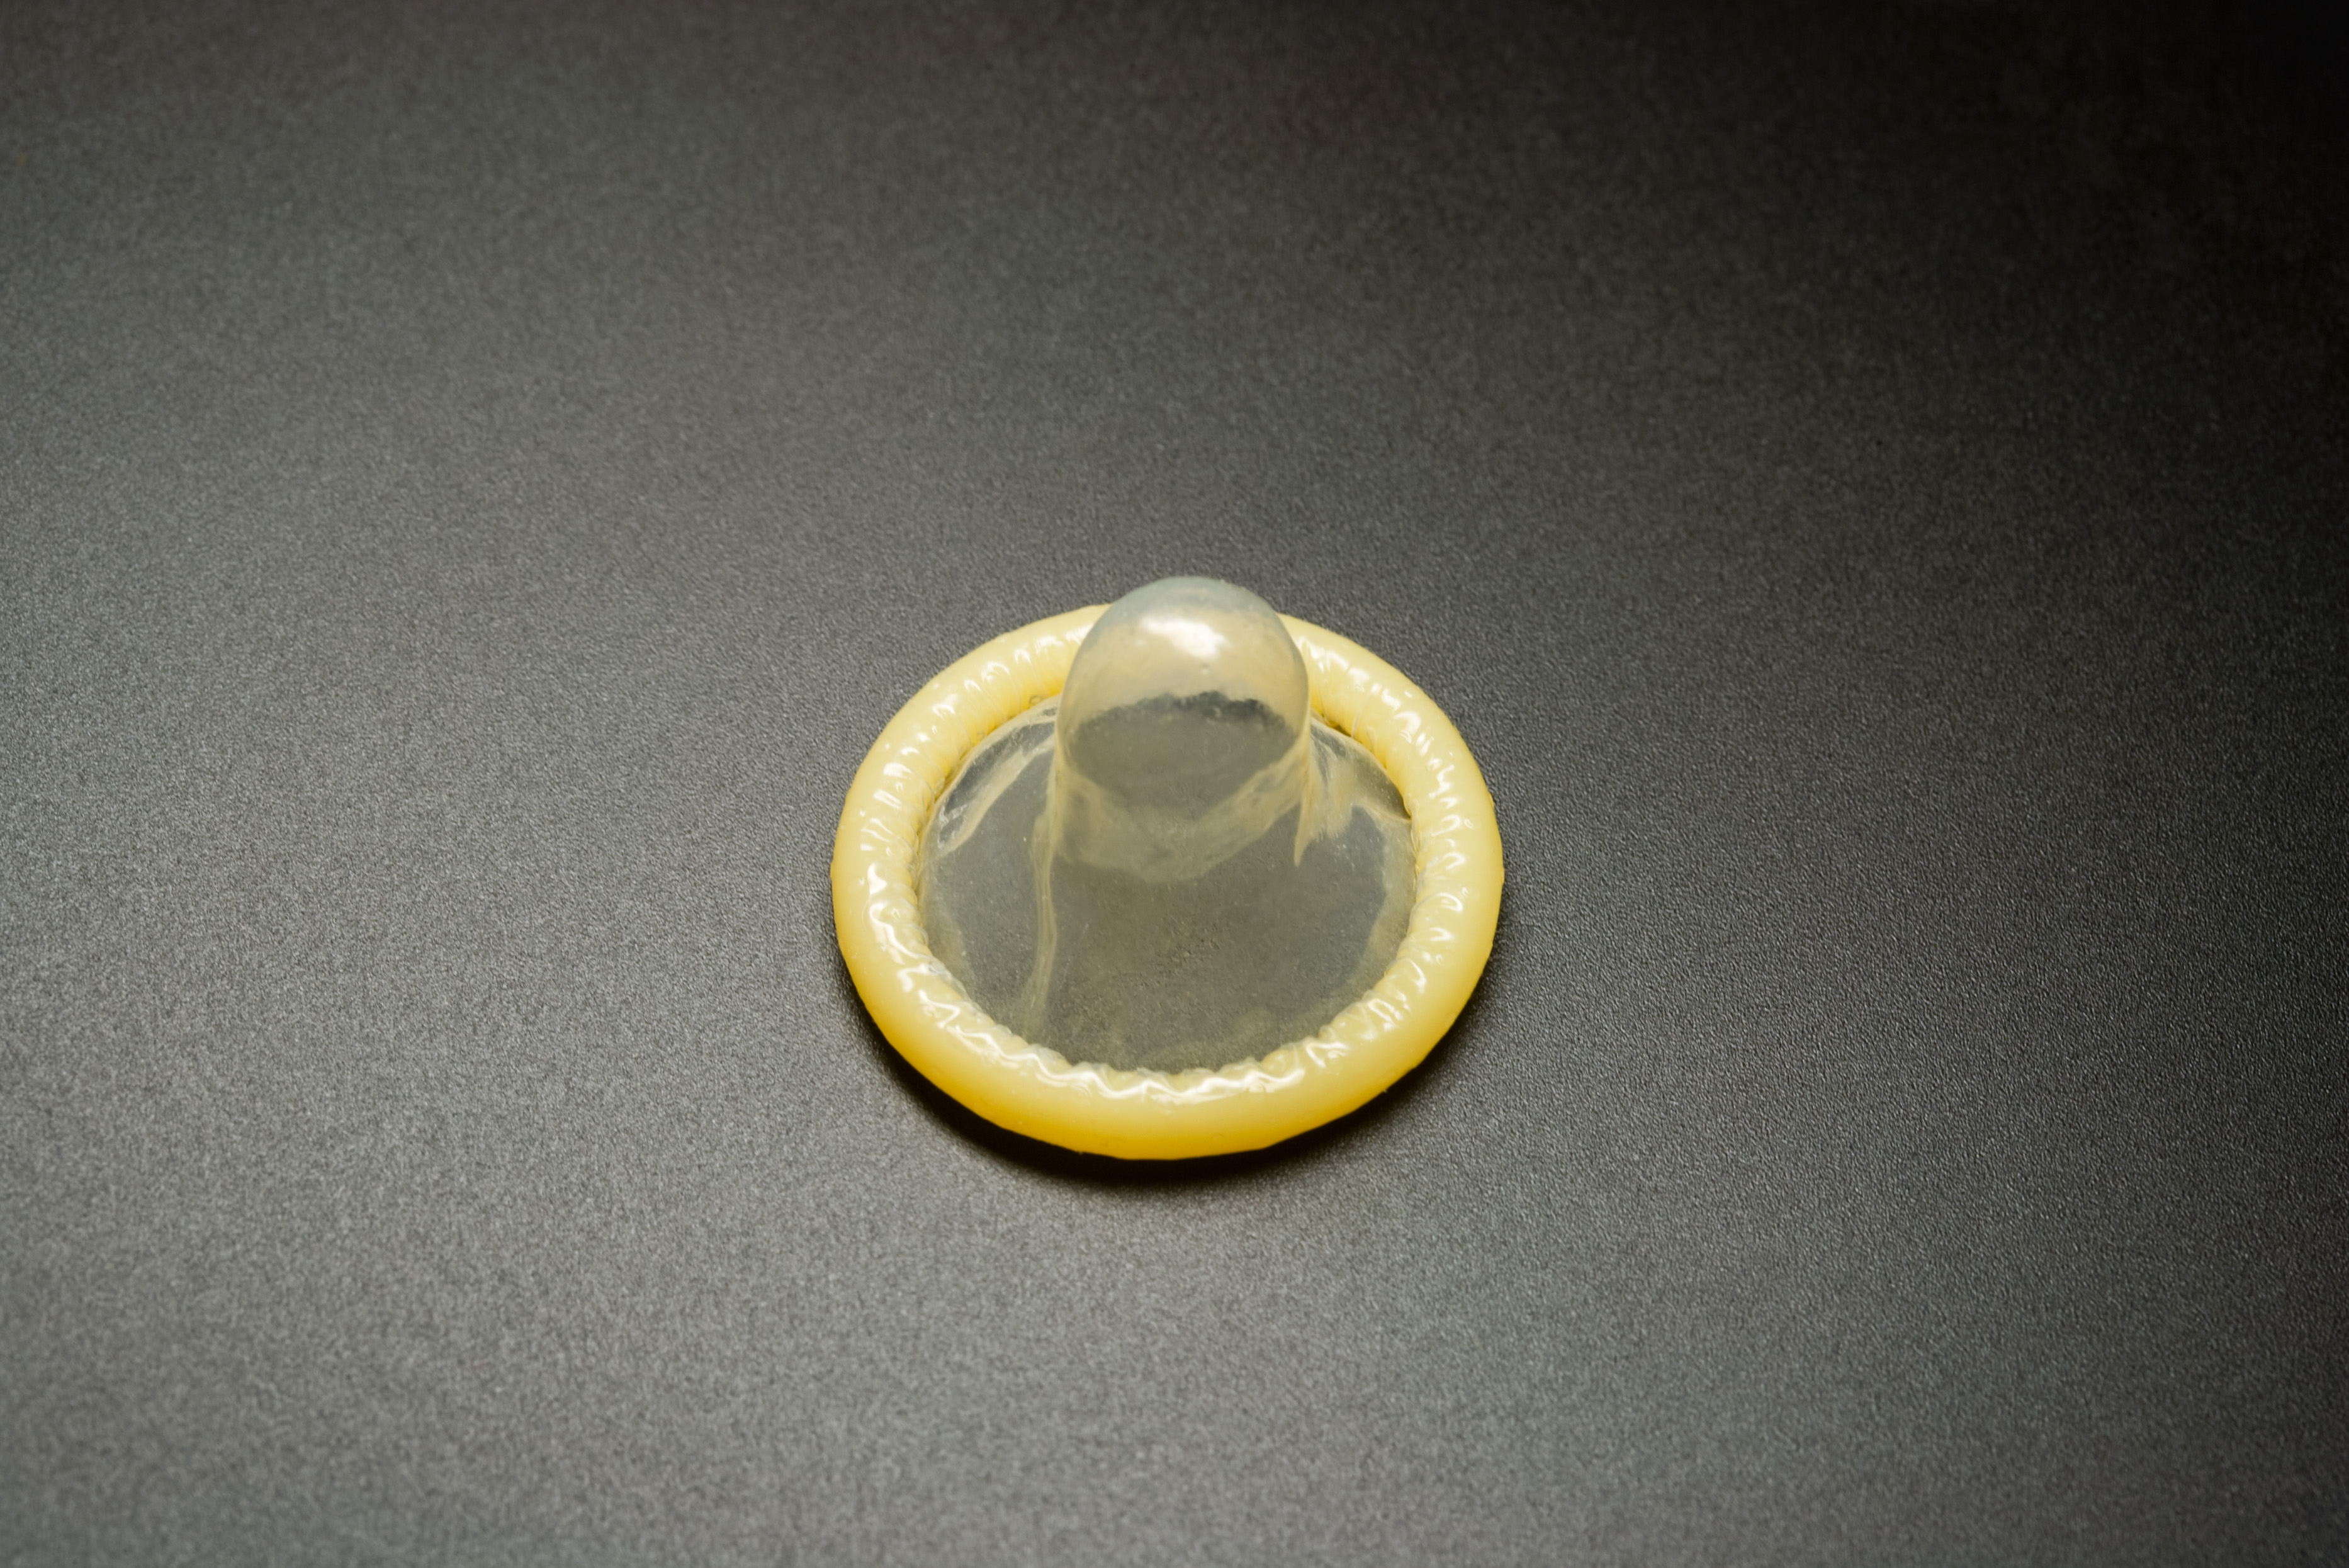 A condom